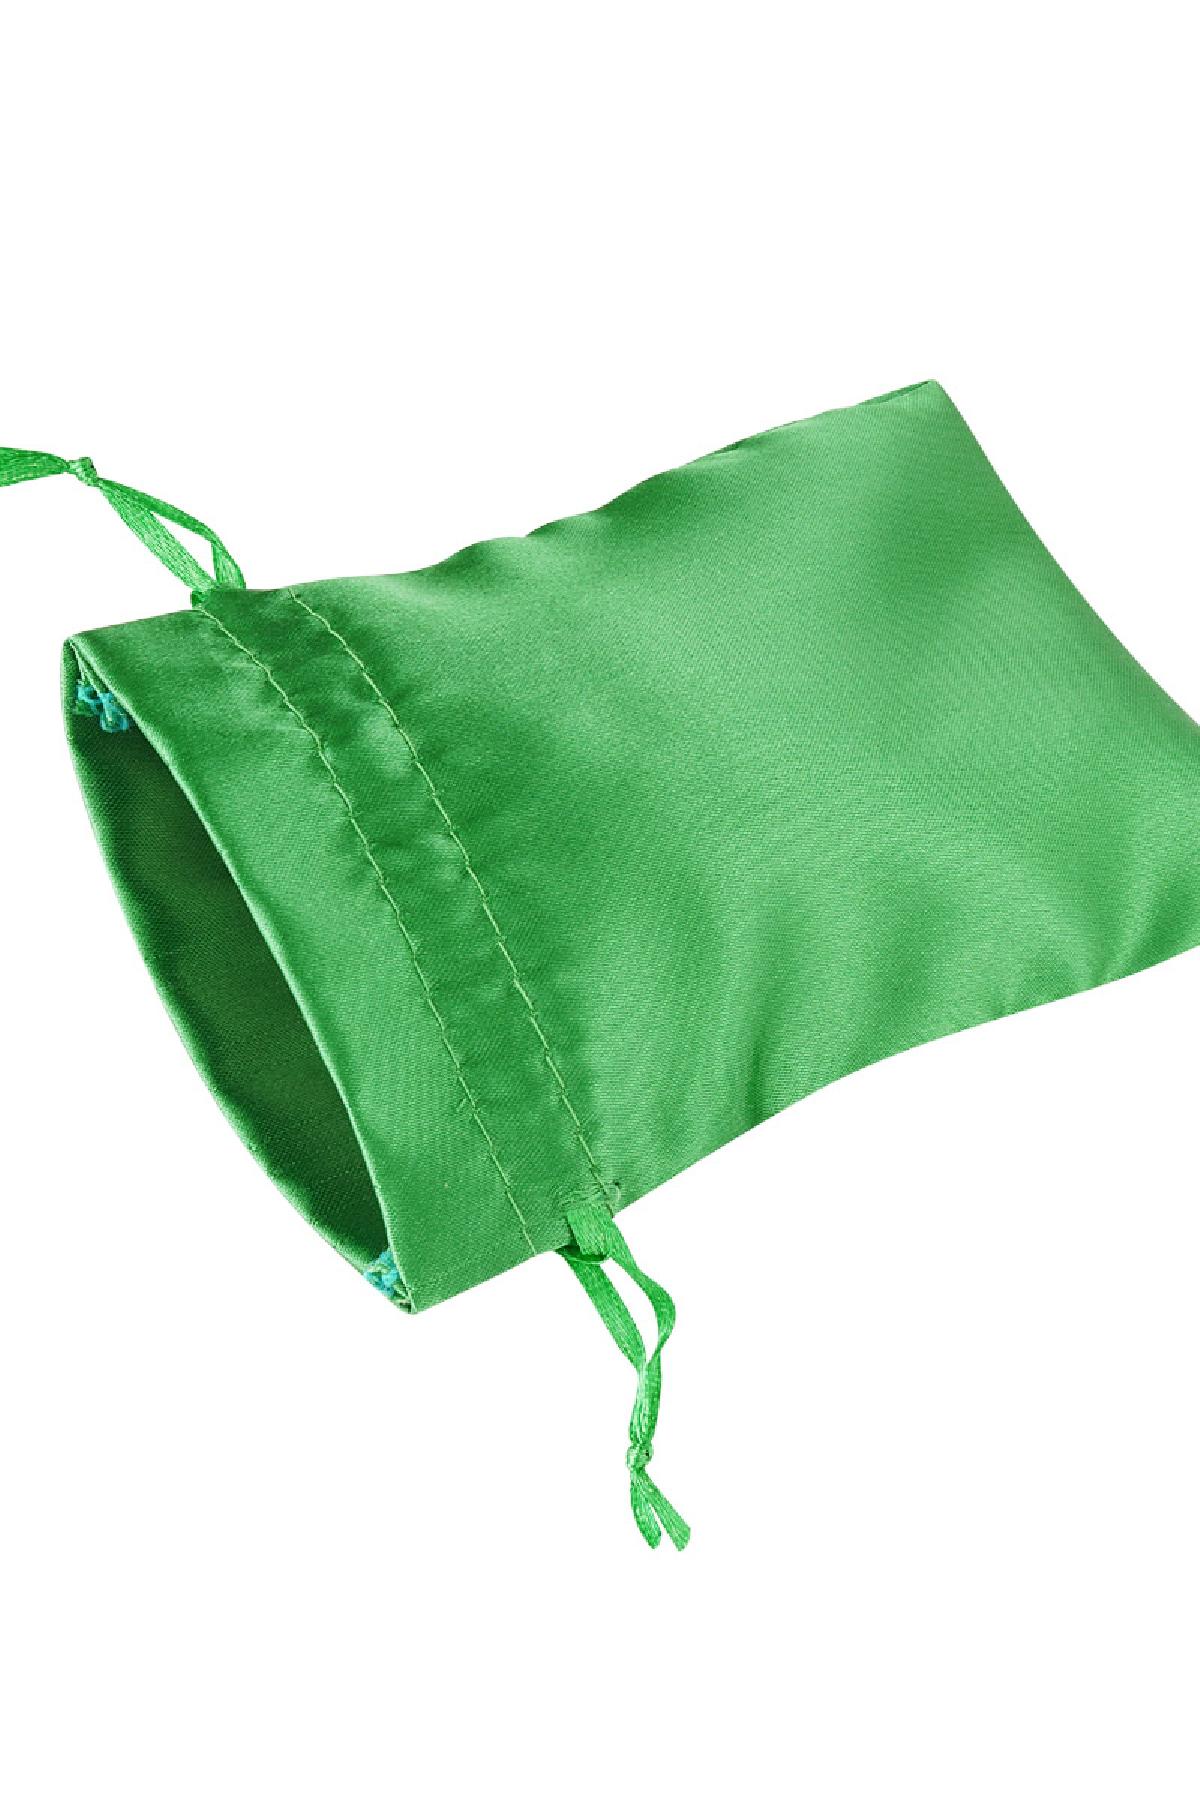 Sieradenzakjes satijn klein - groen Polyester Afbeelding2